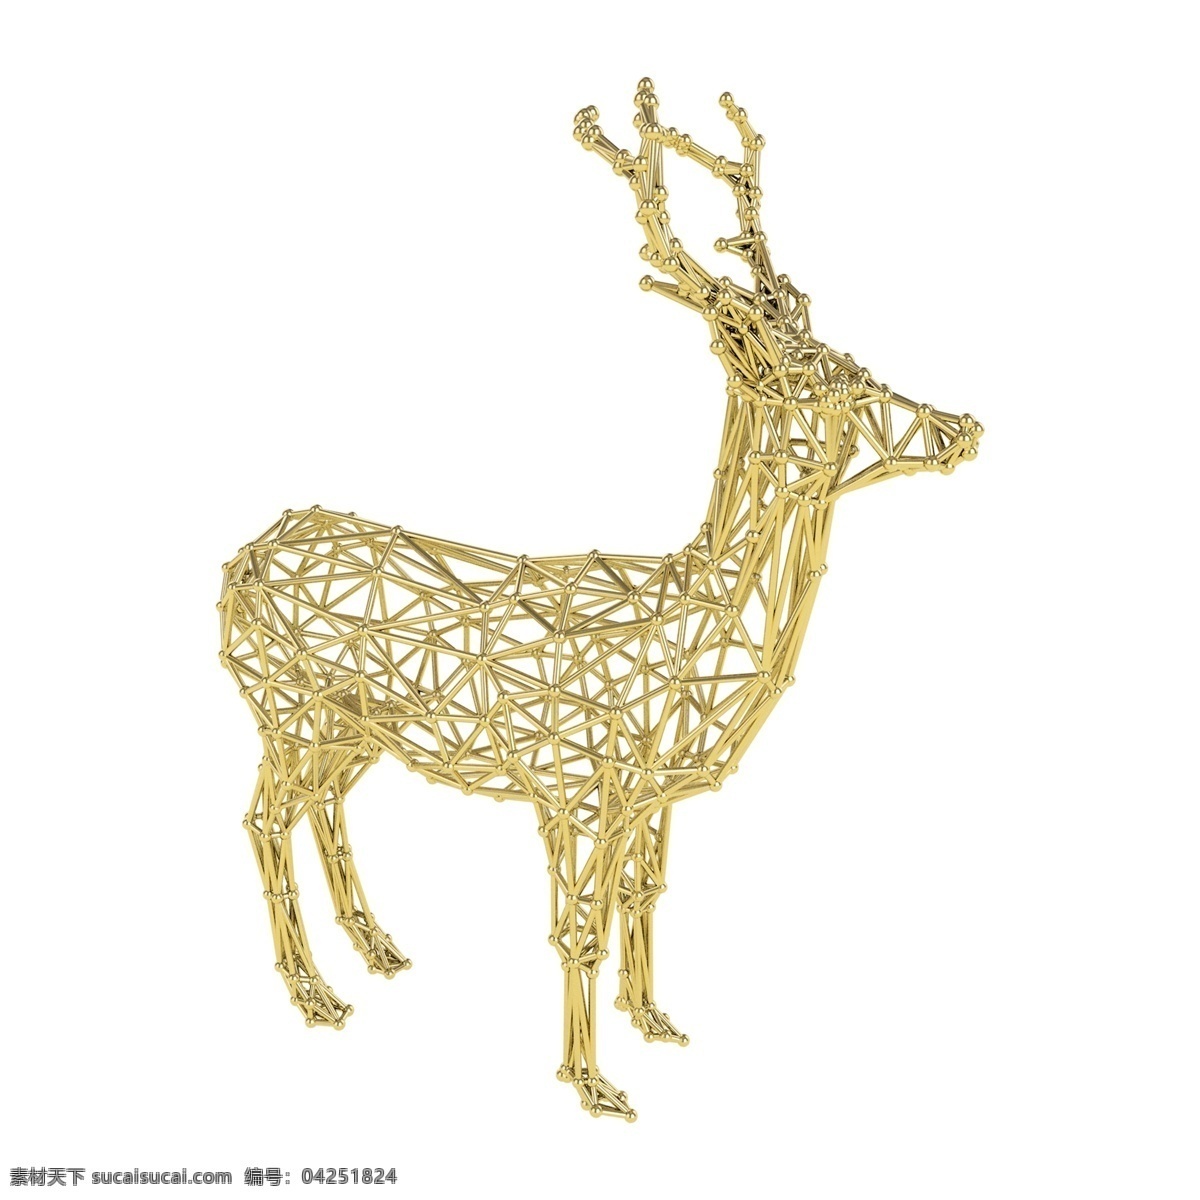 c4d 晶格 黄金 鹿 装饰 麋鹿 圣诞节 圣诞鹿 材质质感 金属 模型 立体 3d 源文件 可编辑 几何色